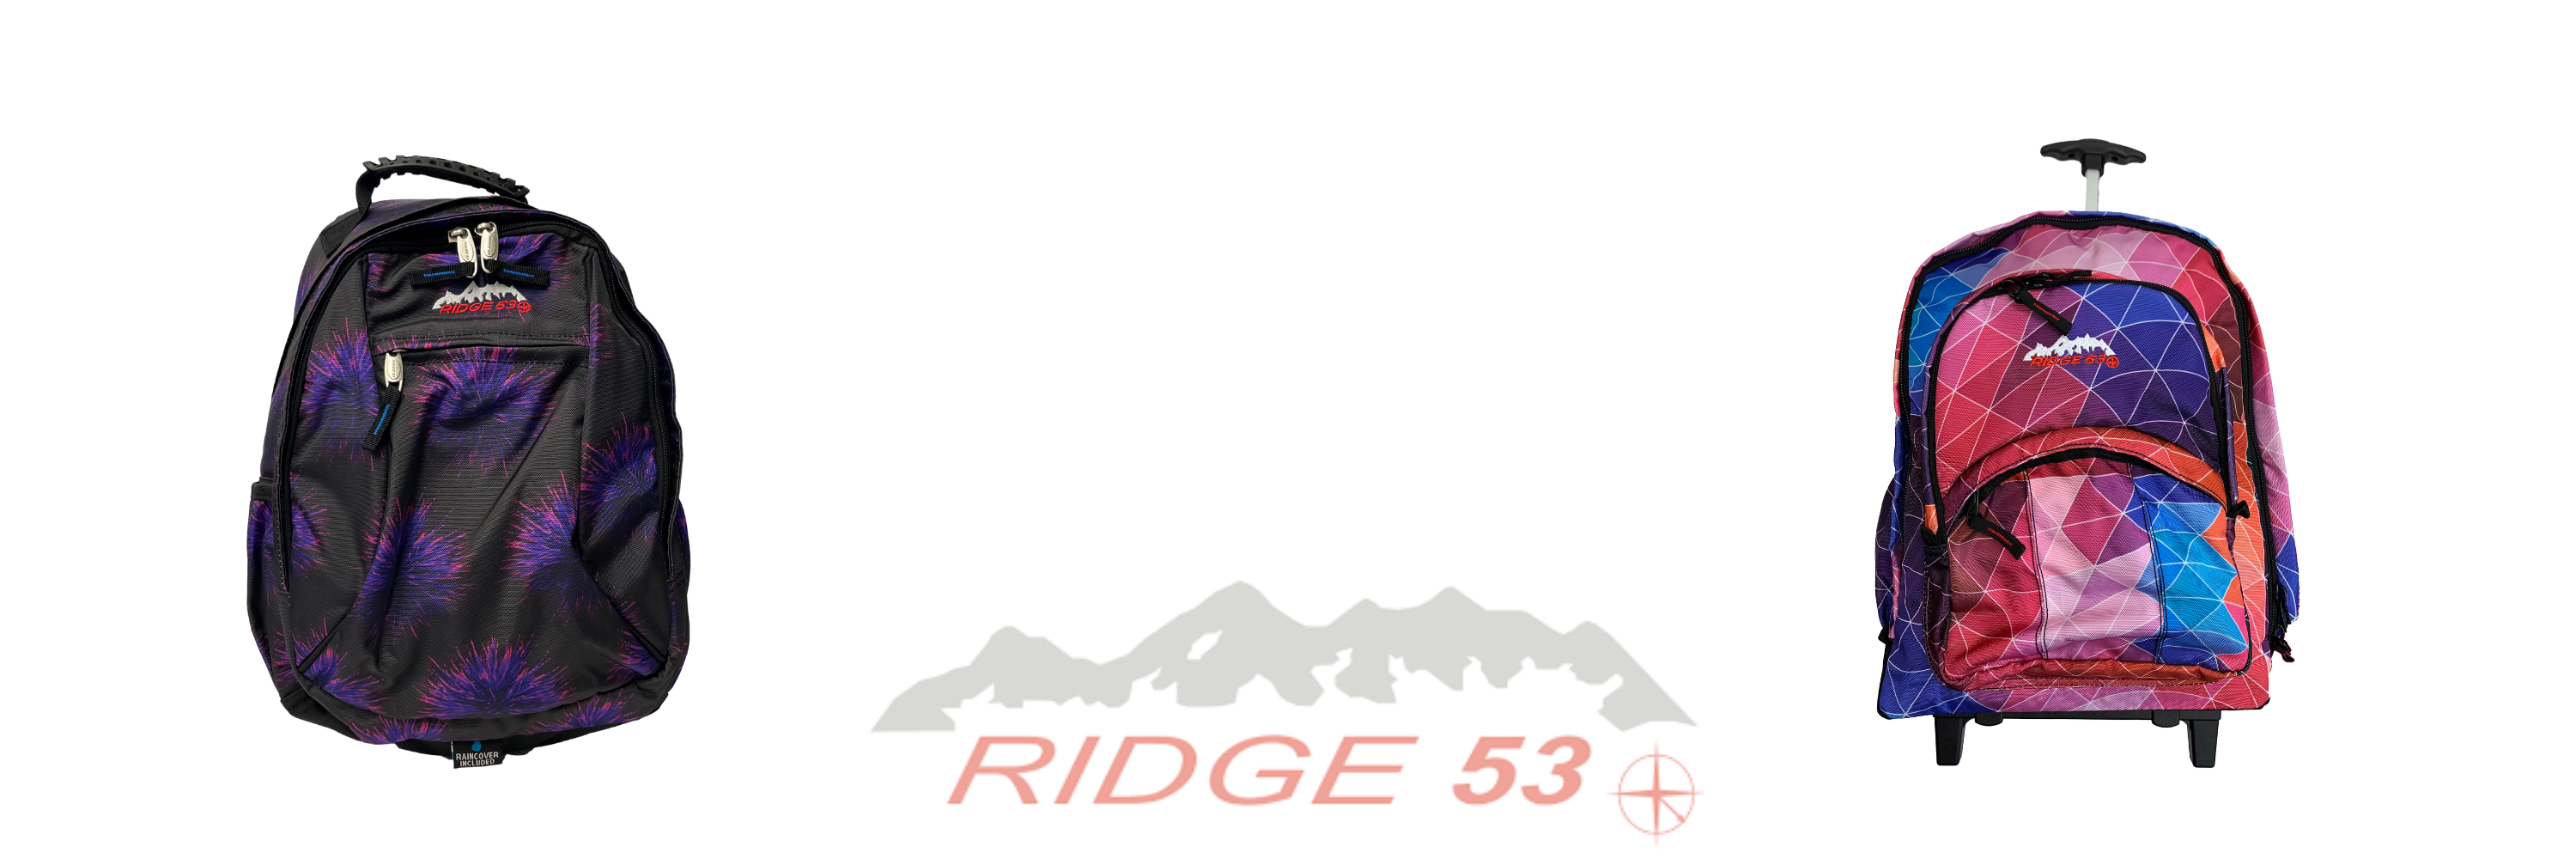 Ridge53 Backpacks